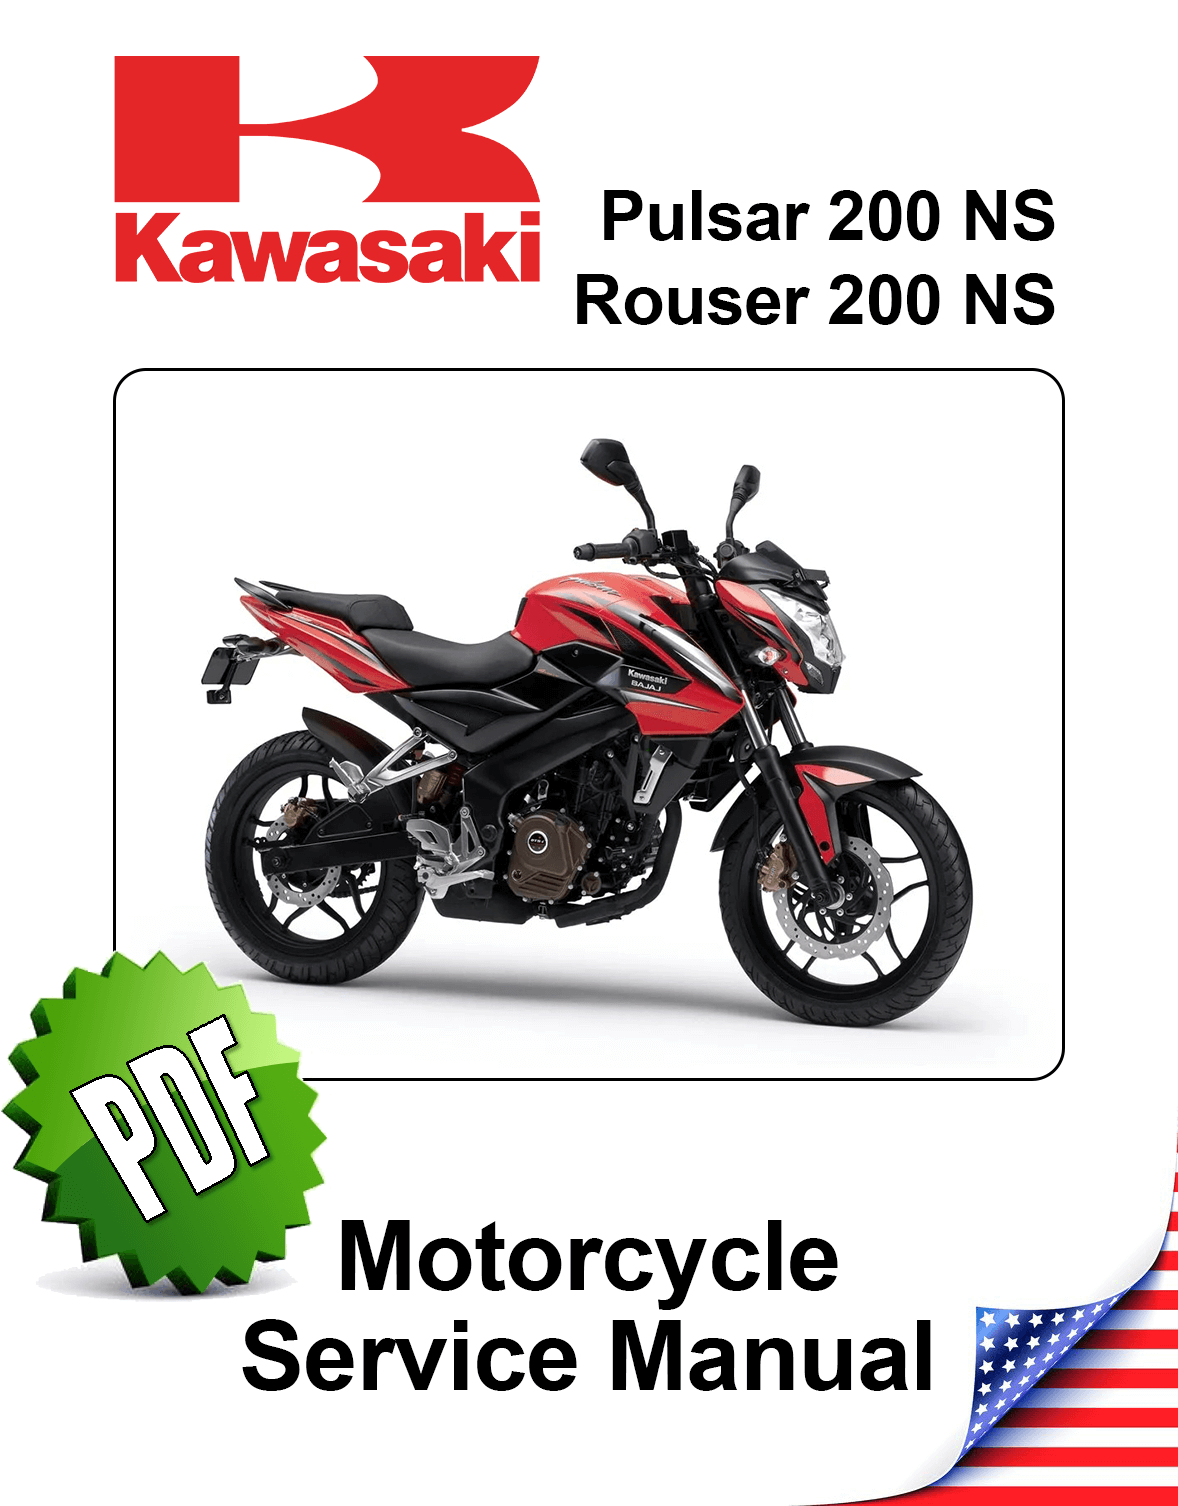 Kawasaki Bajaj Pulsar 200 NS Models 2012-2-13 Service Manual PDF download